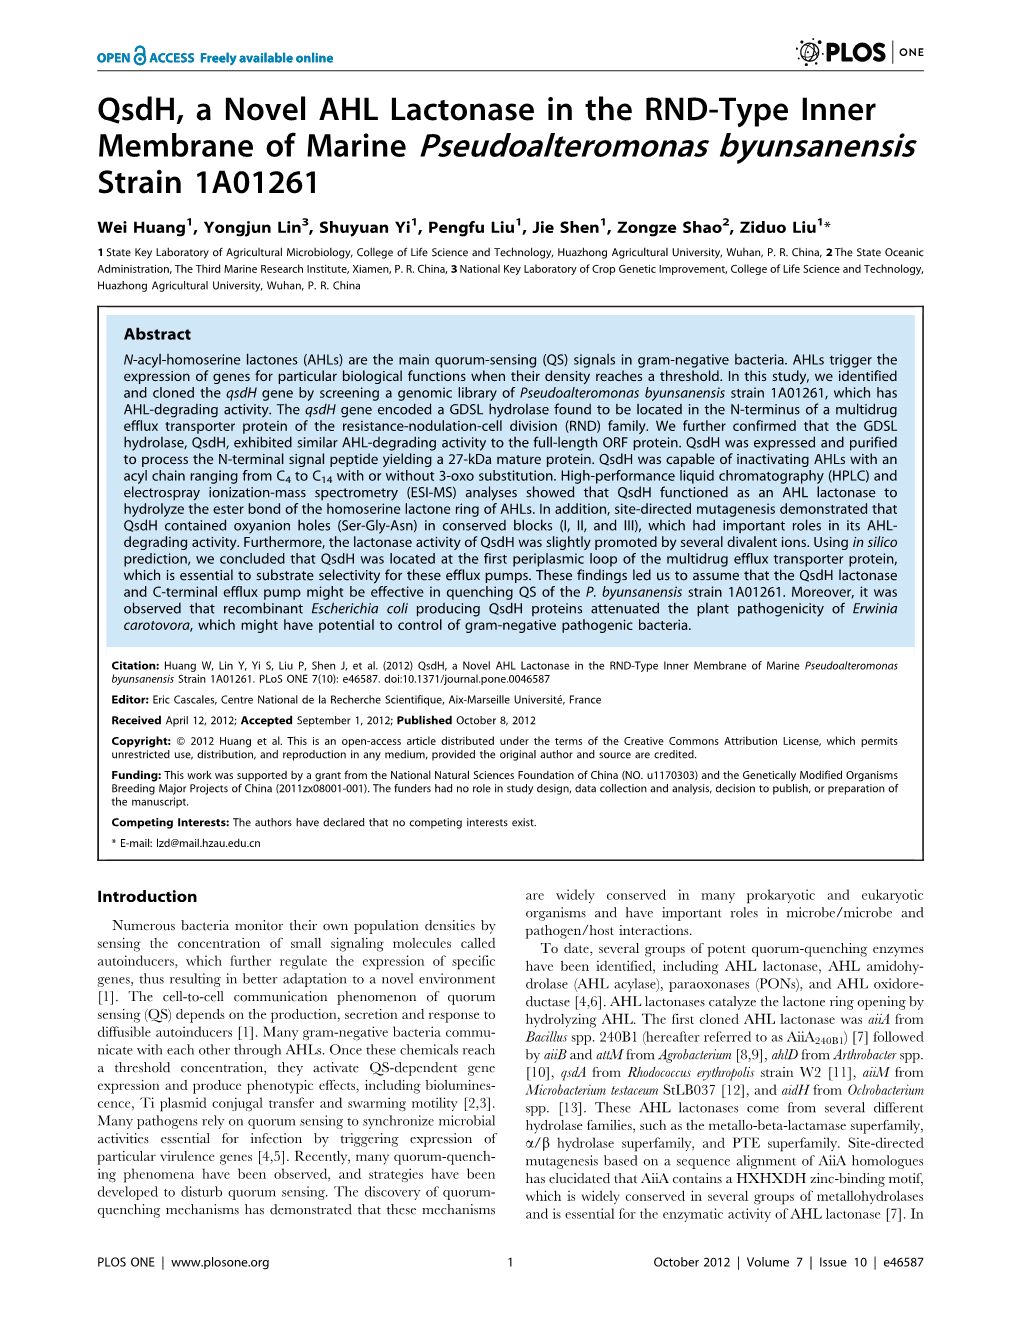 Qsdh, a Novel AHL Lactonase in the RND-Type Inner Membrane of Marine Pseudoalteromonas Byunsanensis Strain 1A01261